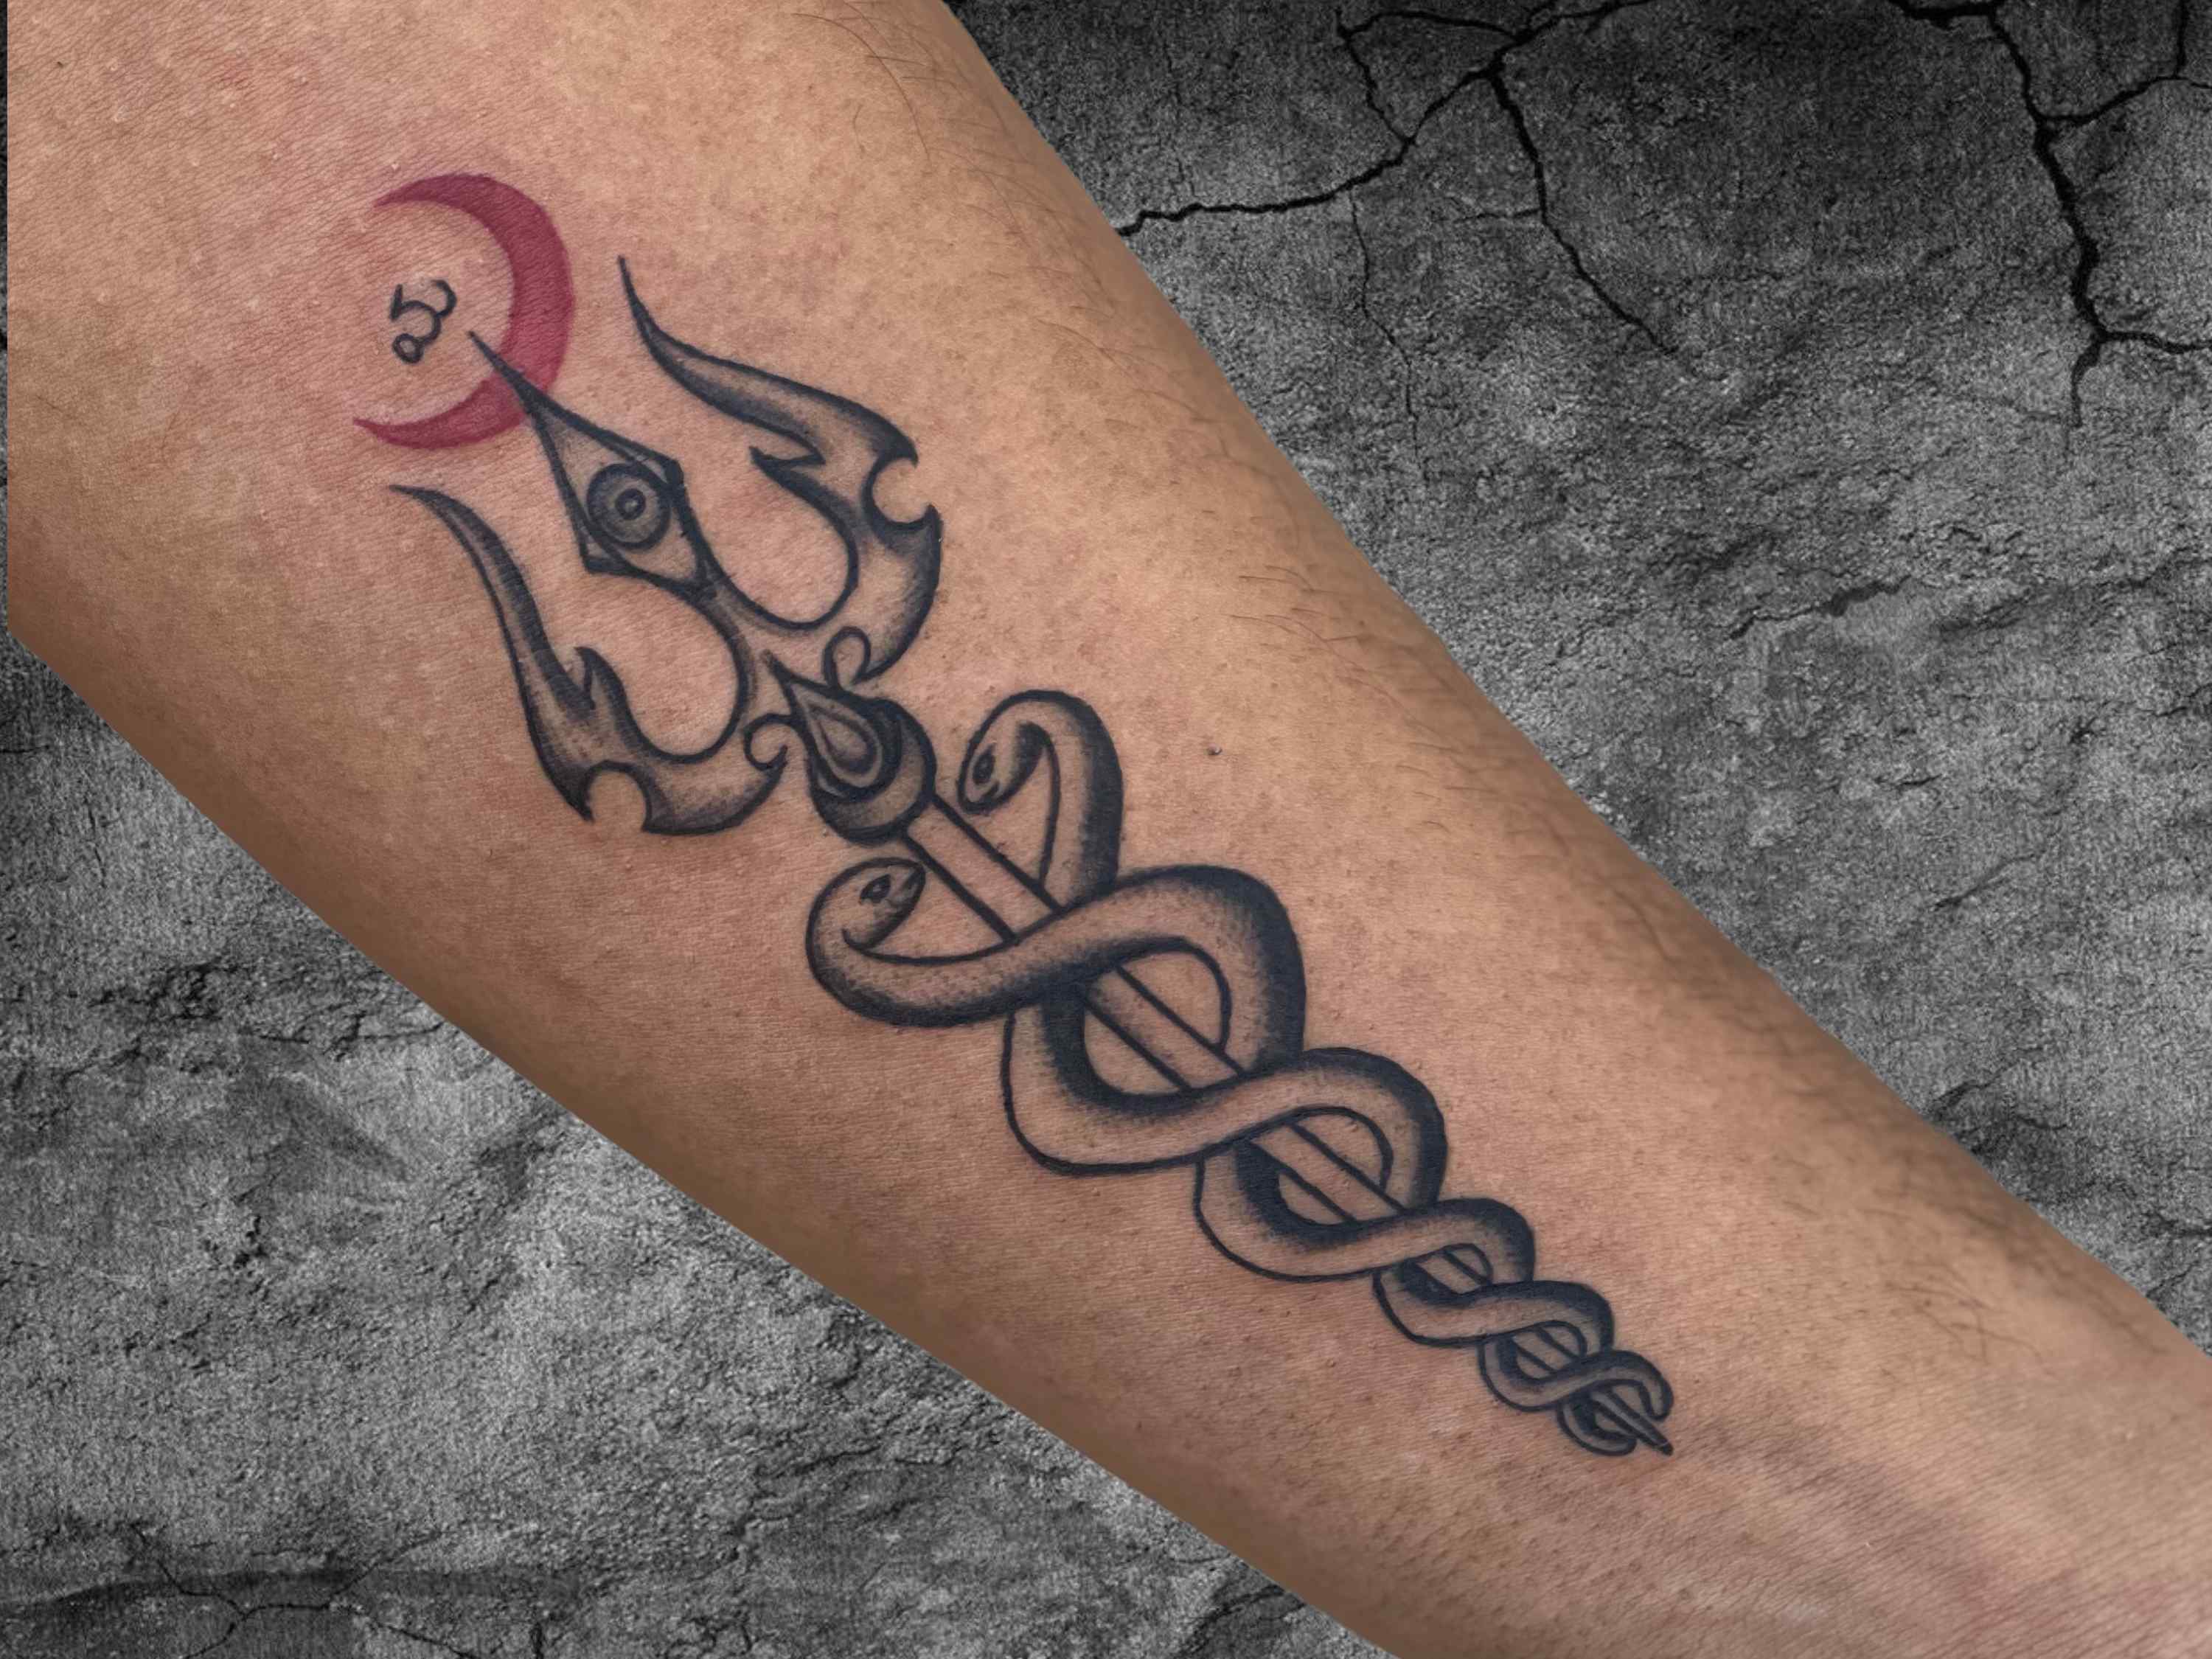 Crazy ink tattoo  Body piercing on X Realistic realism trishul with snake  tattoo of lord Shiva Done by tattoo artist Raju sahu Raipur India trishul trishultattoo snaketattoo snake damrutattoo shivatattoo  mahadevtattoo mahakaaltattoo 